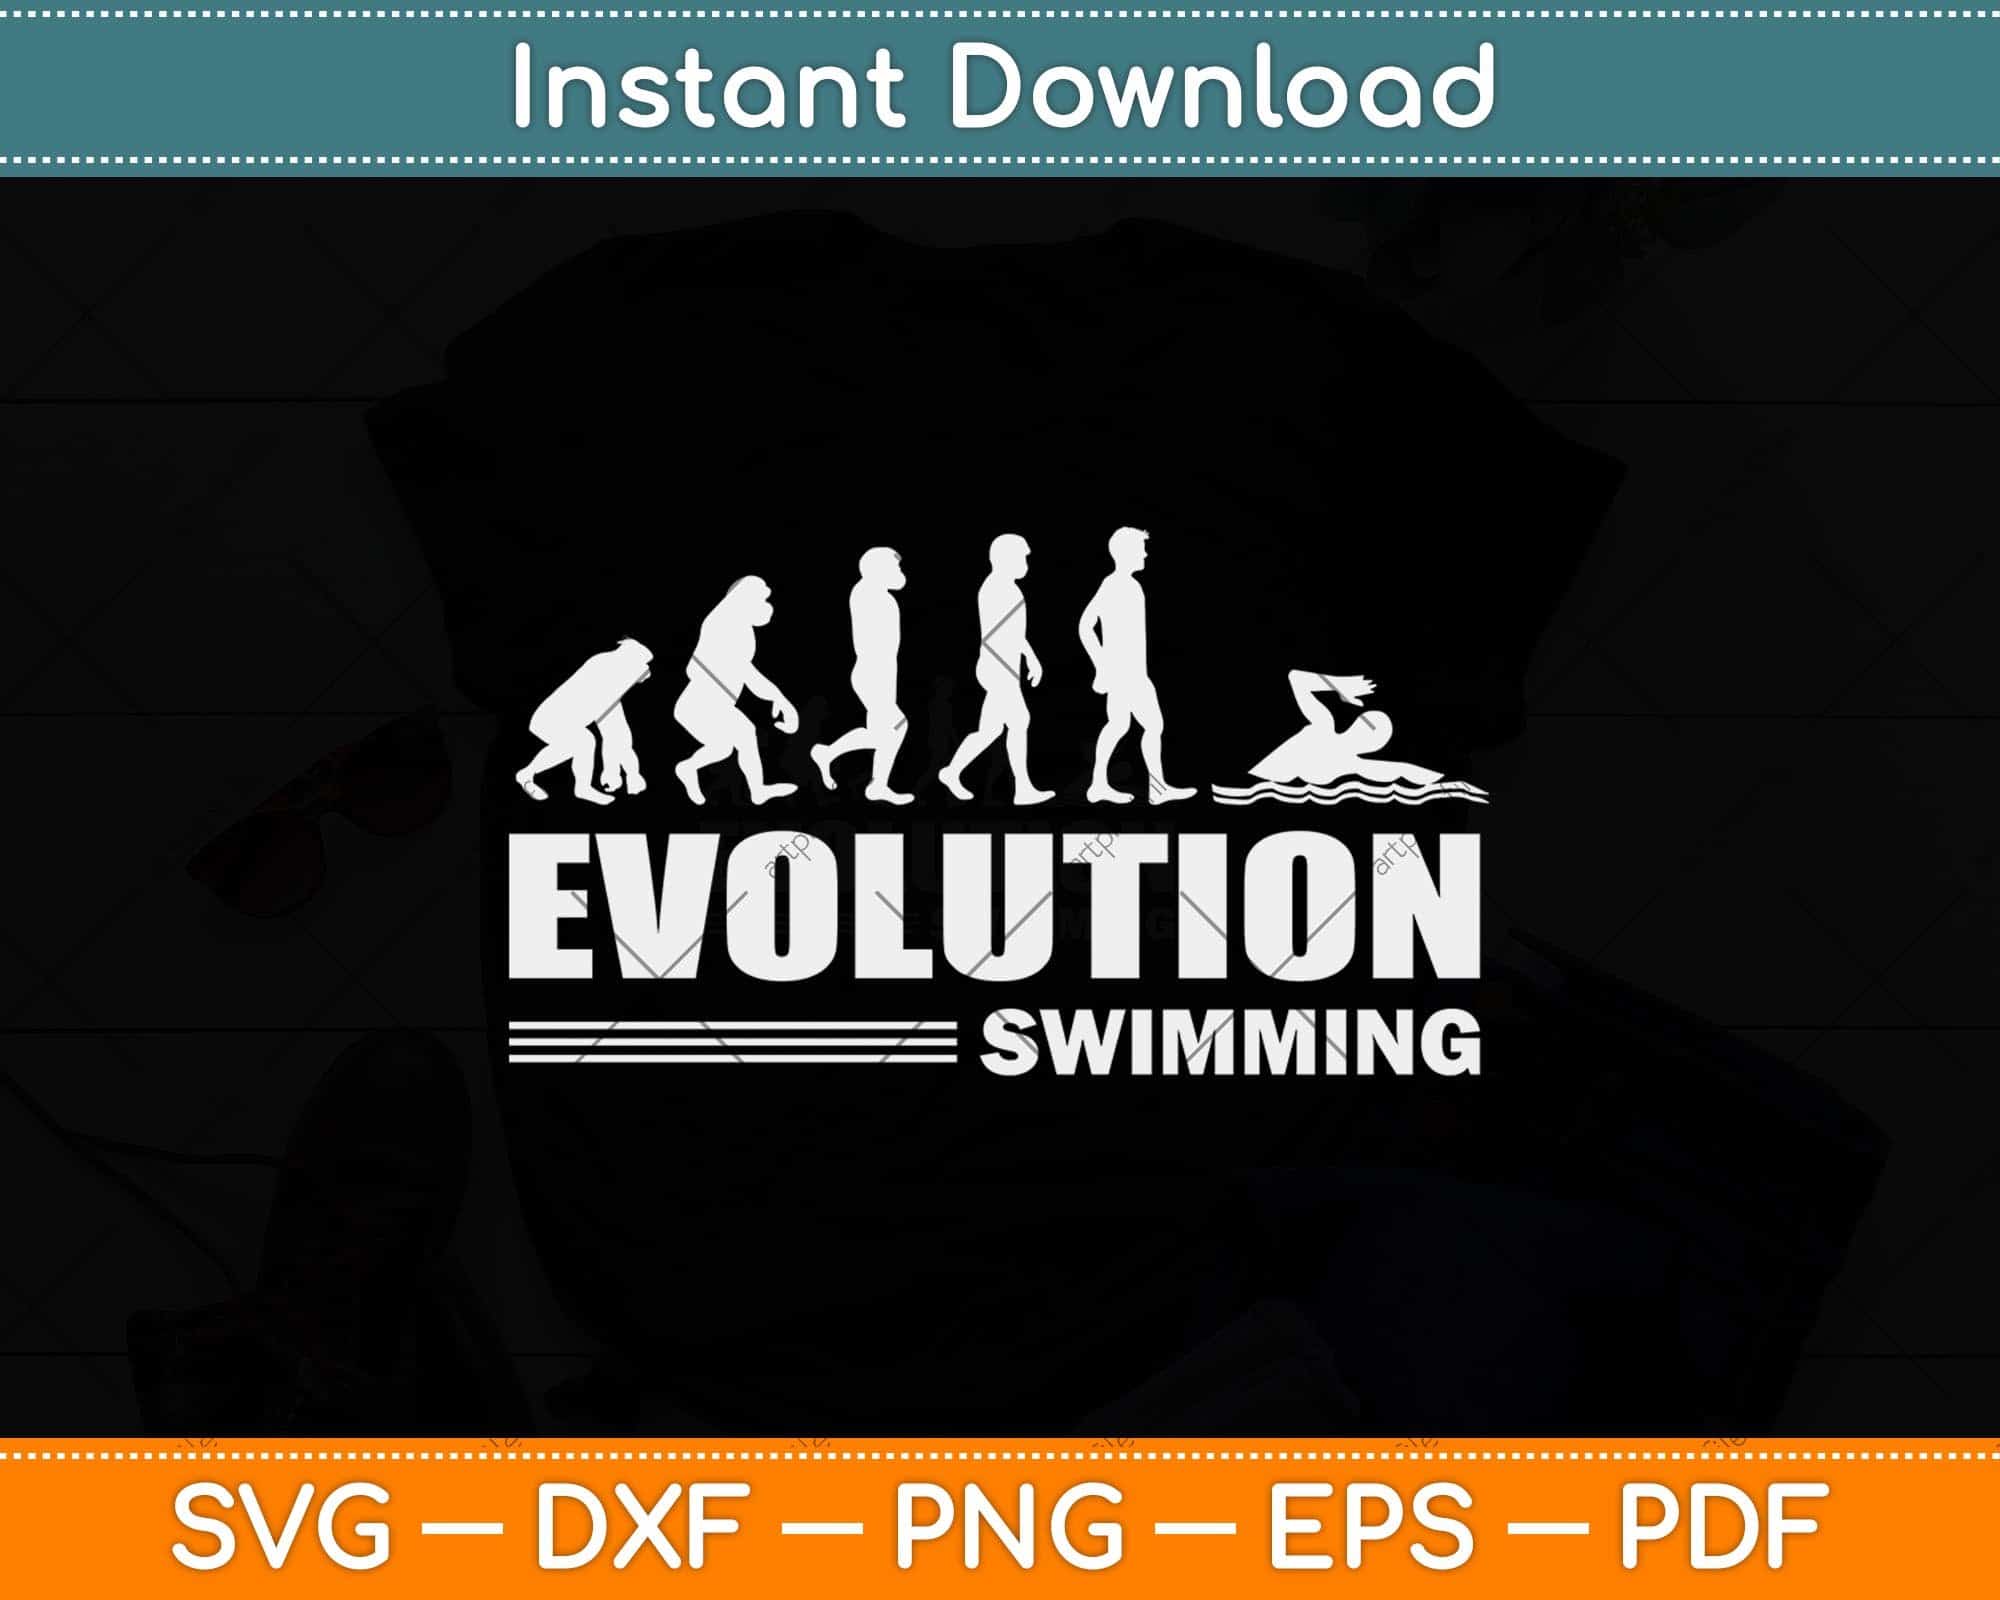 Evolution Swimming Svg Design Cricut Printable Cutting Files